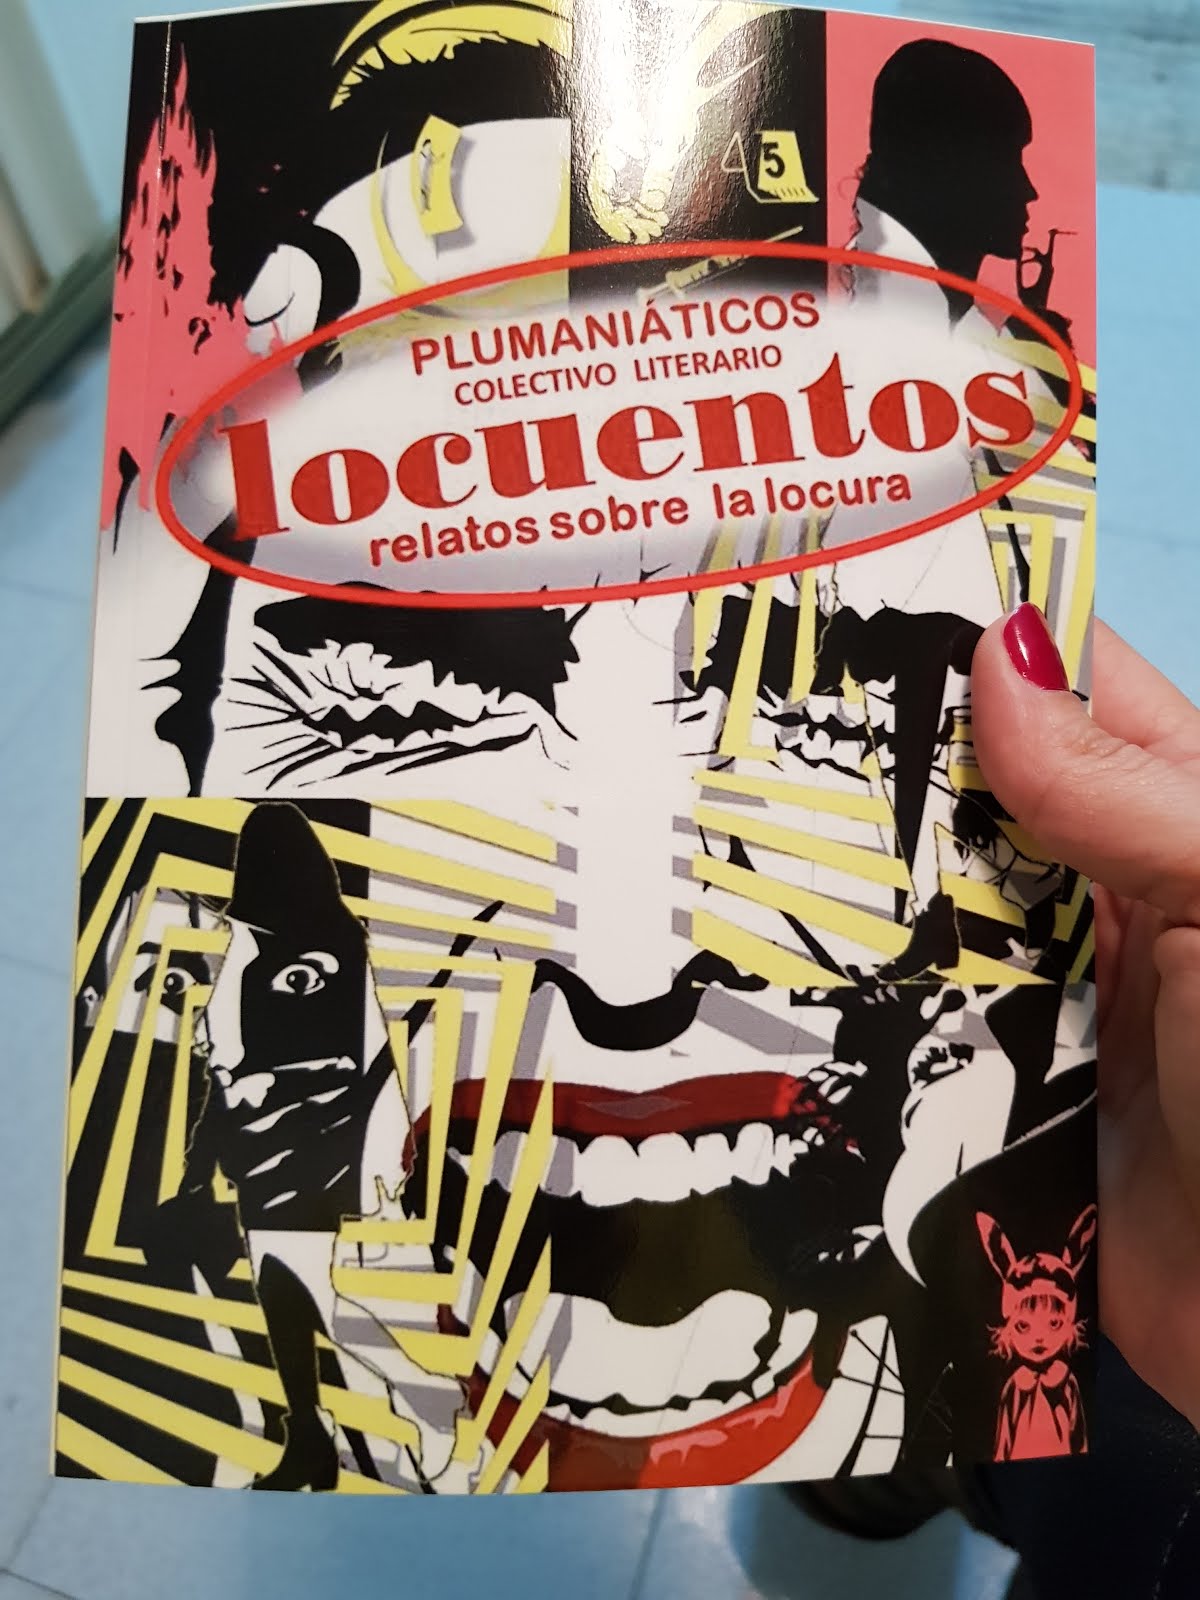 "LOCUENTOS" - Colectivo Literario Plumaniáticos